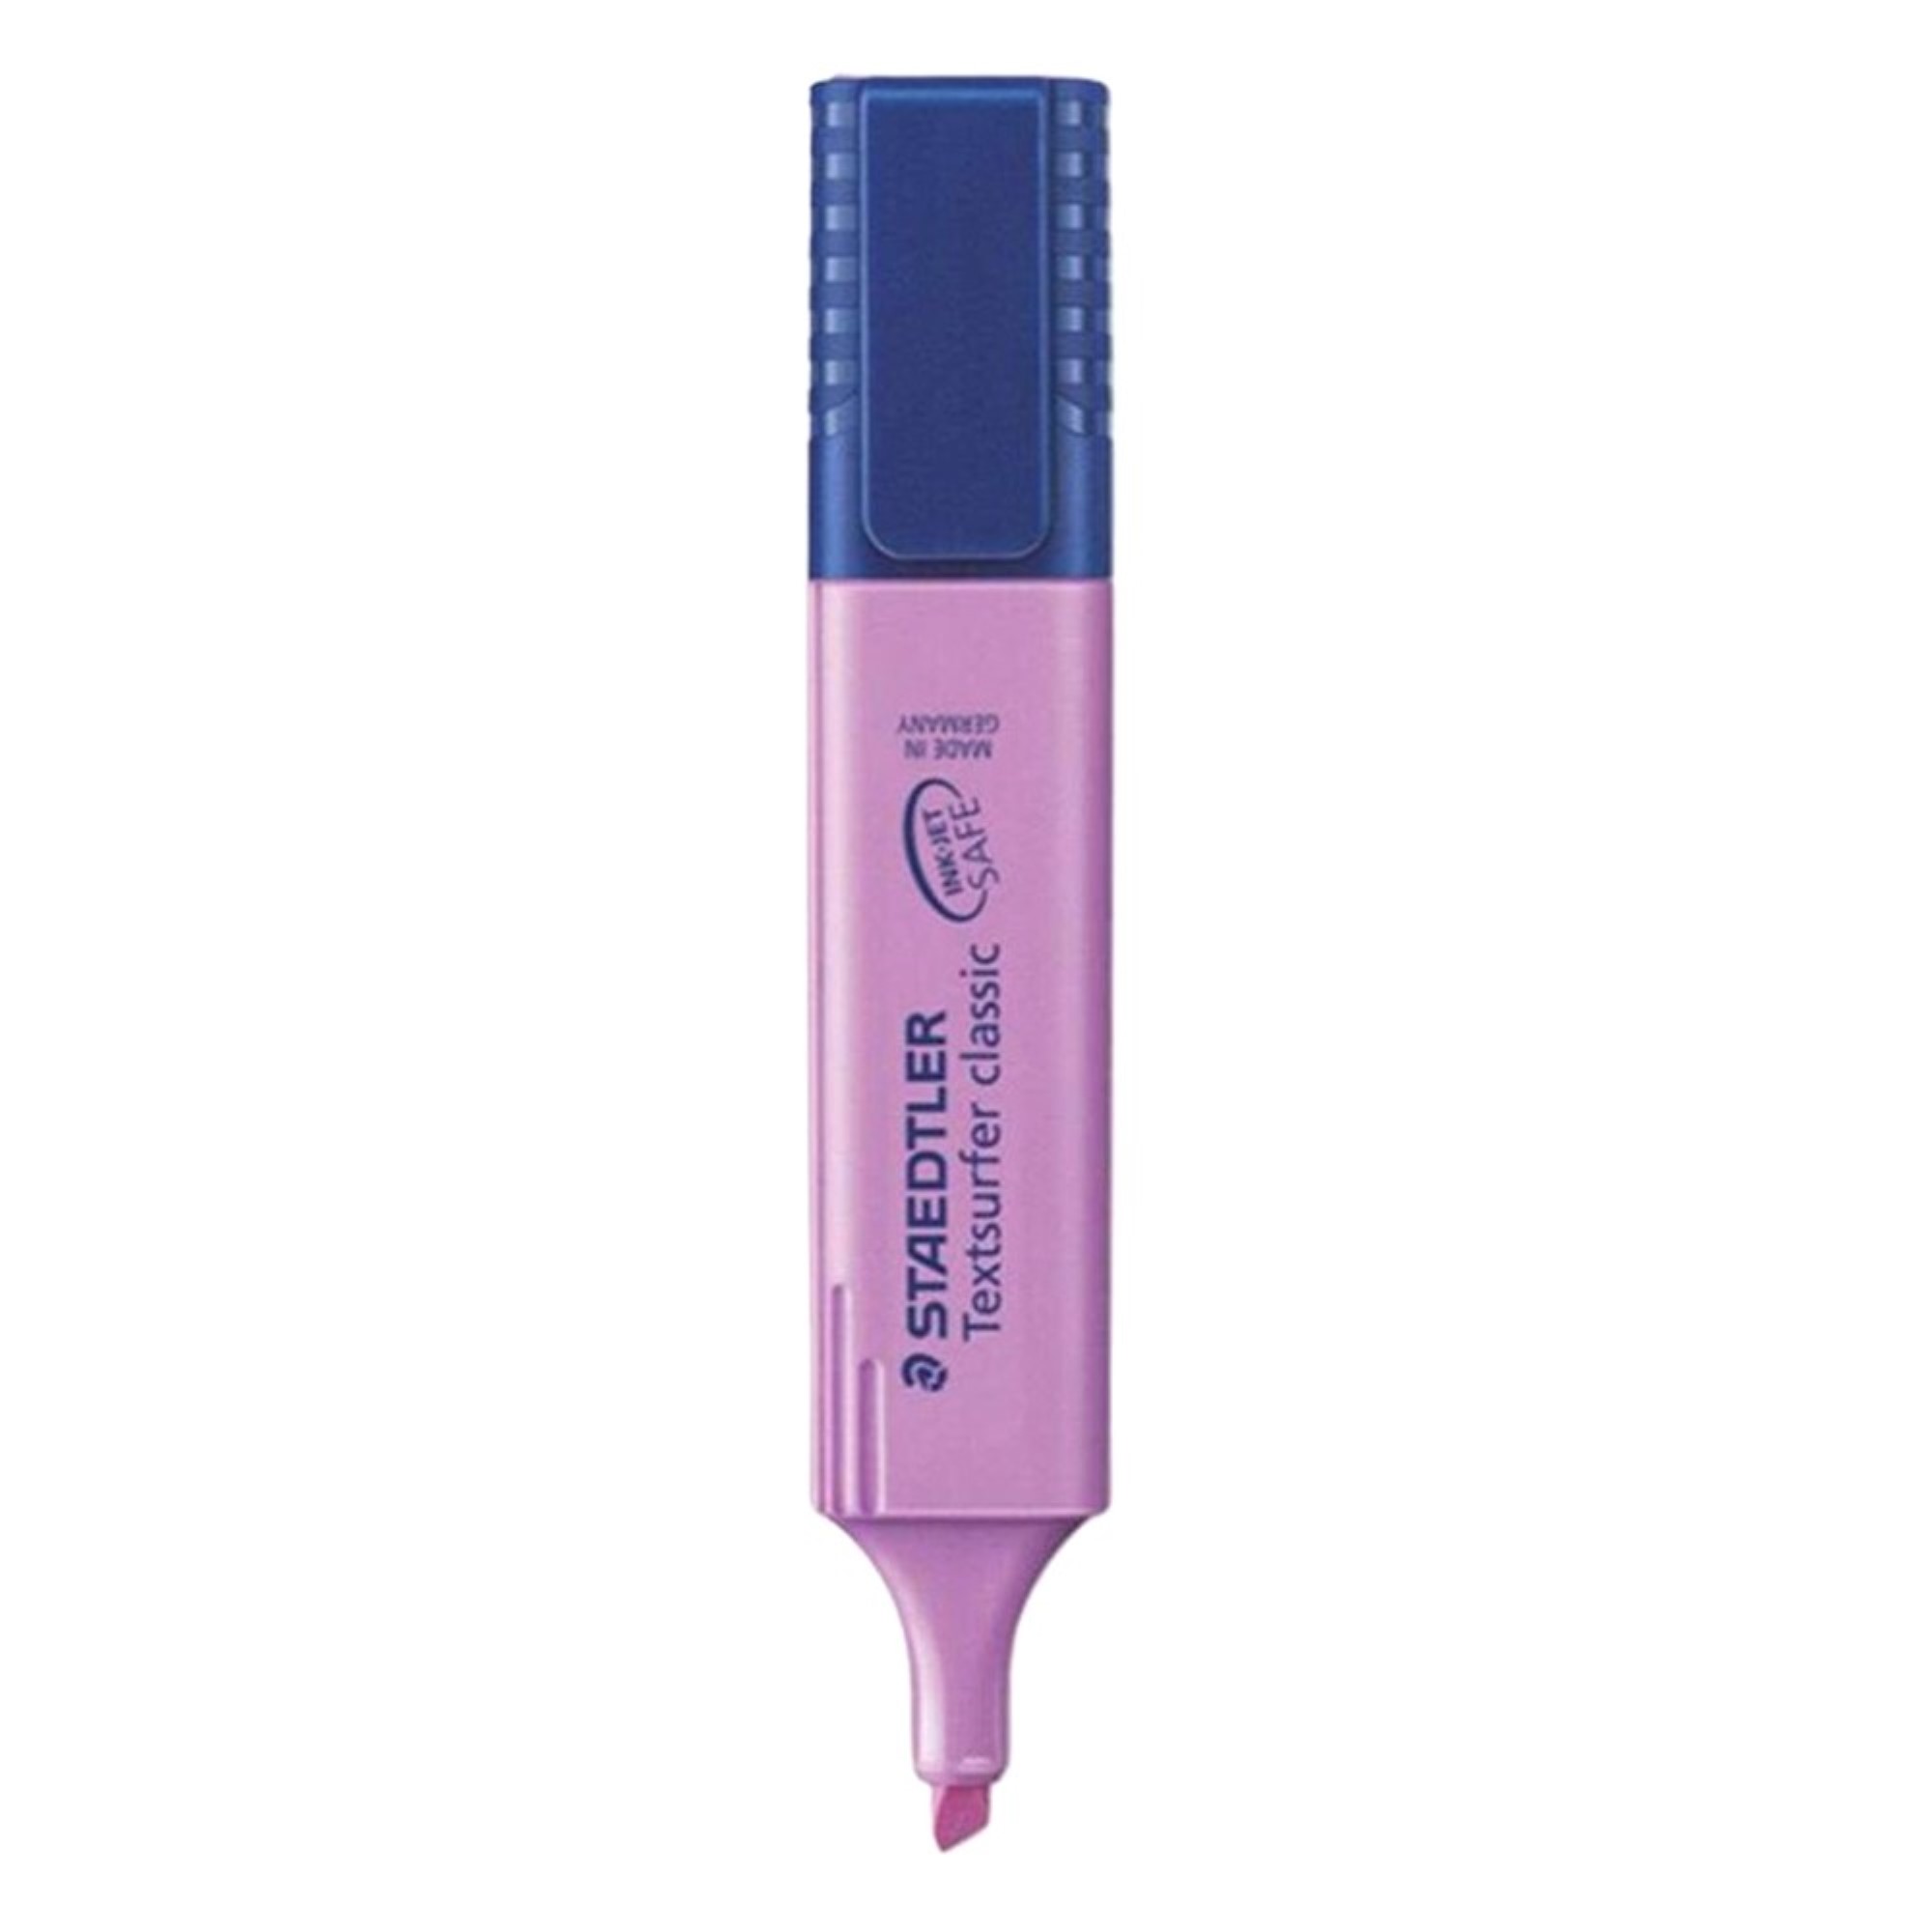 Staedtler Textsurfer Classic Highlighter Pen - Purple